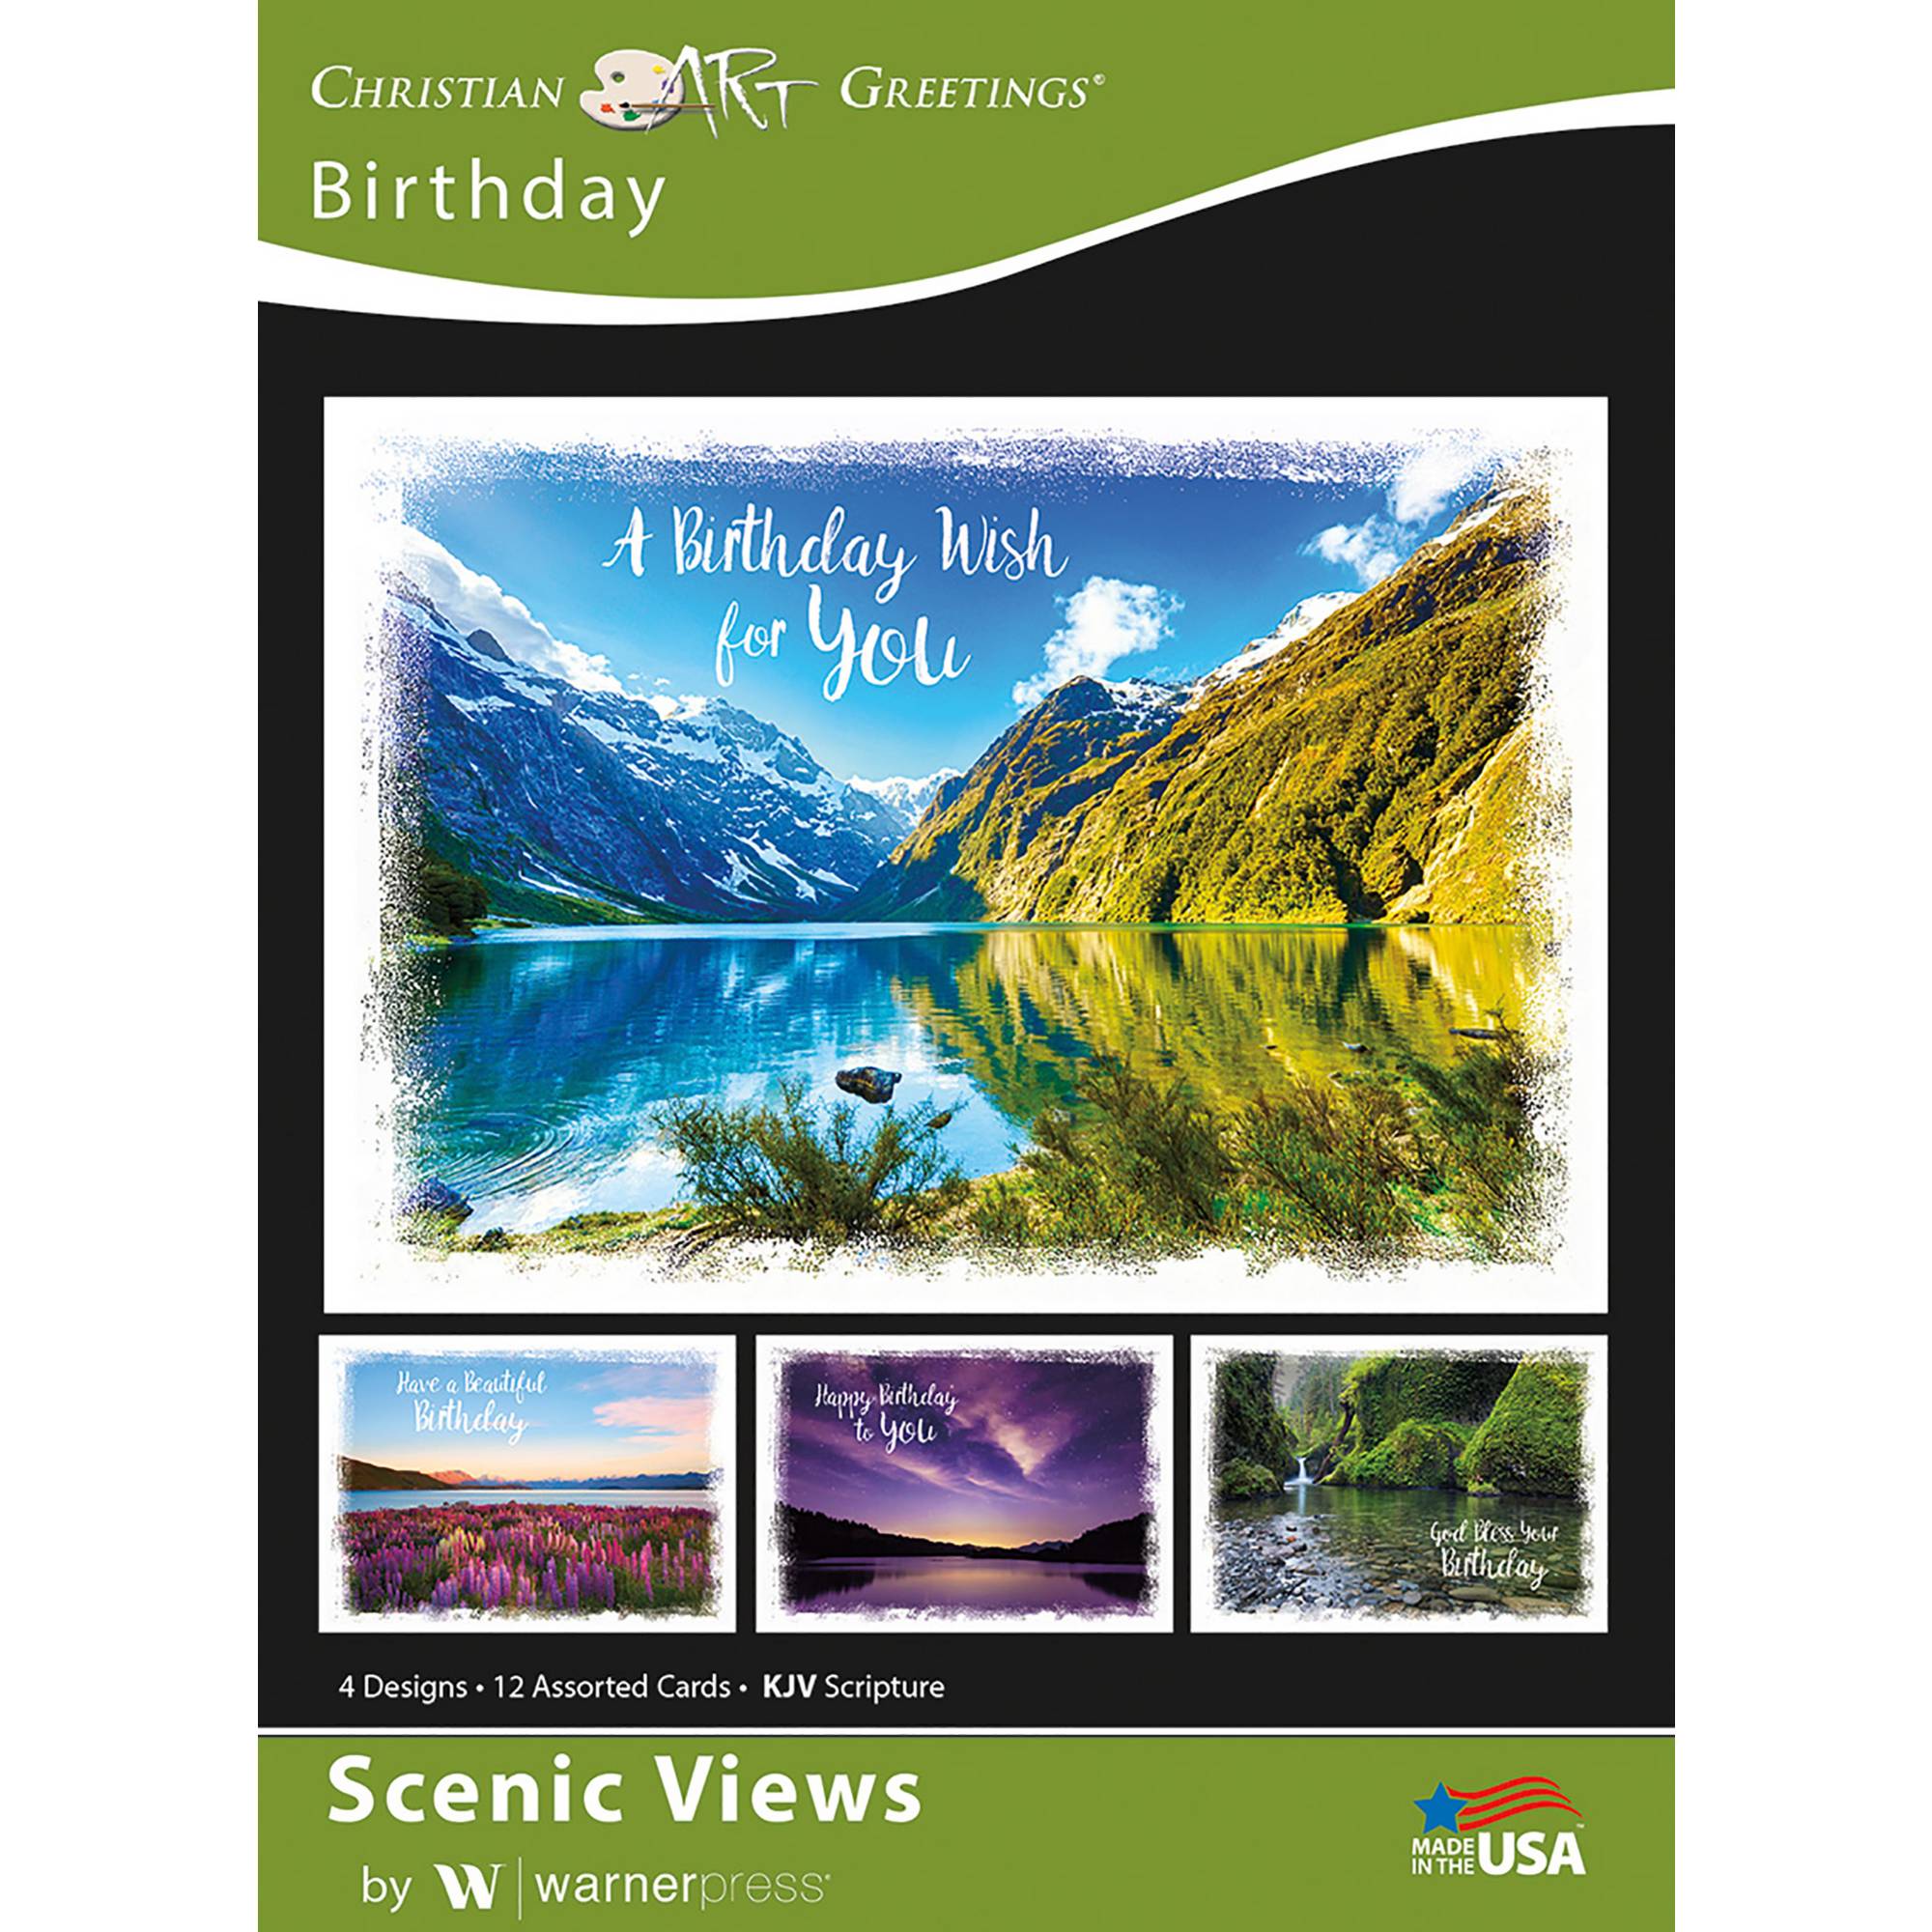 Enjoy the Journey Birthday Card, Scenic Travel Birthday Cards